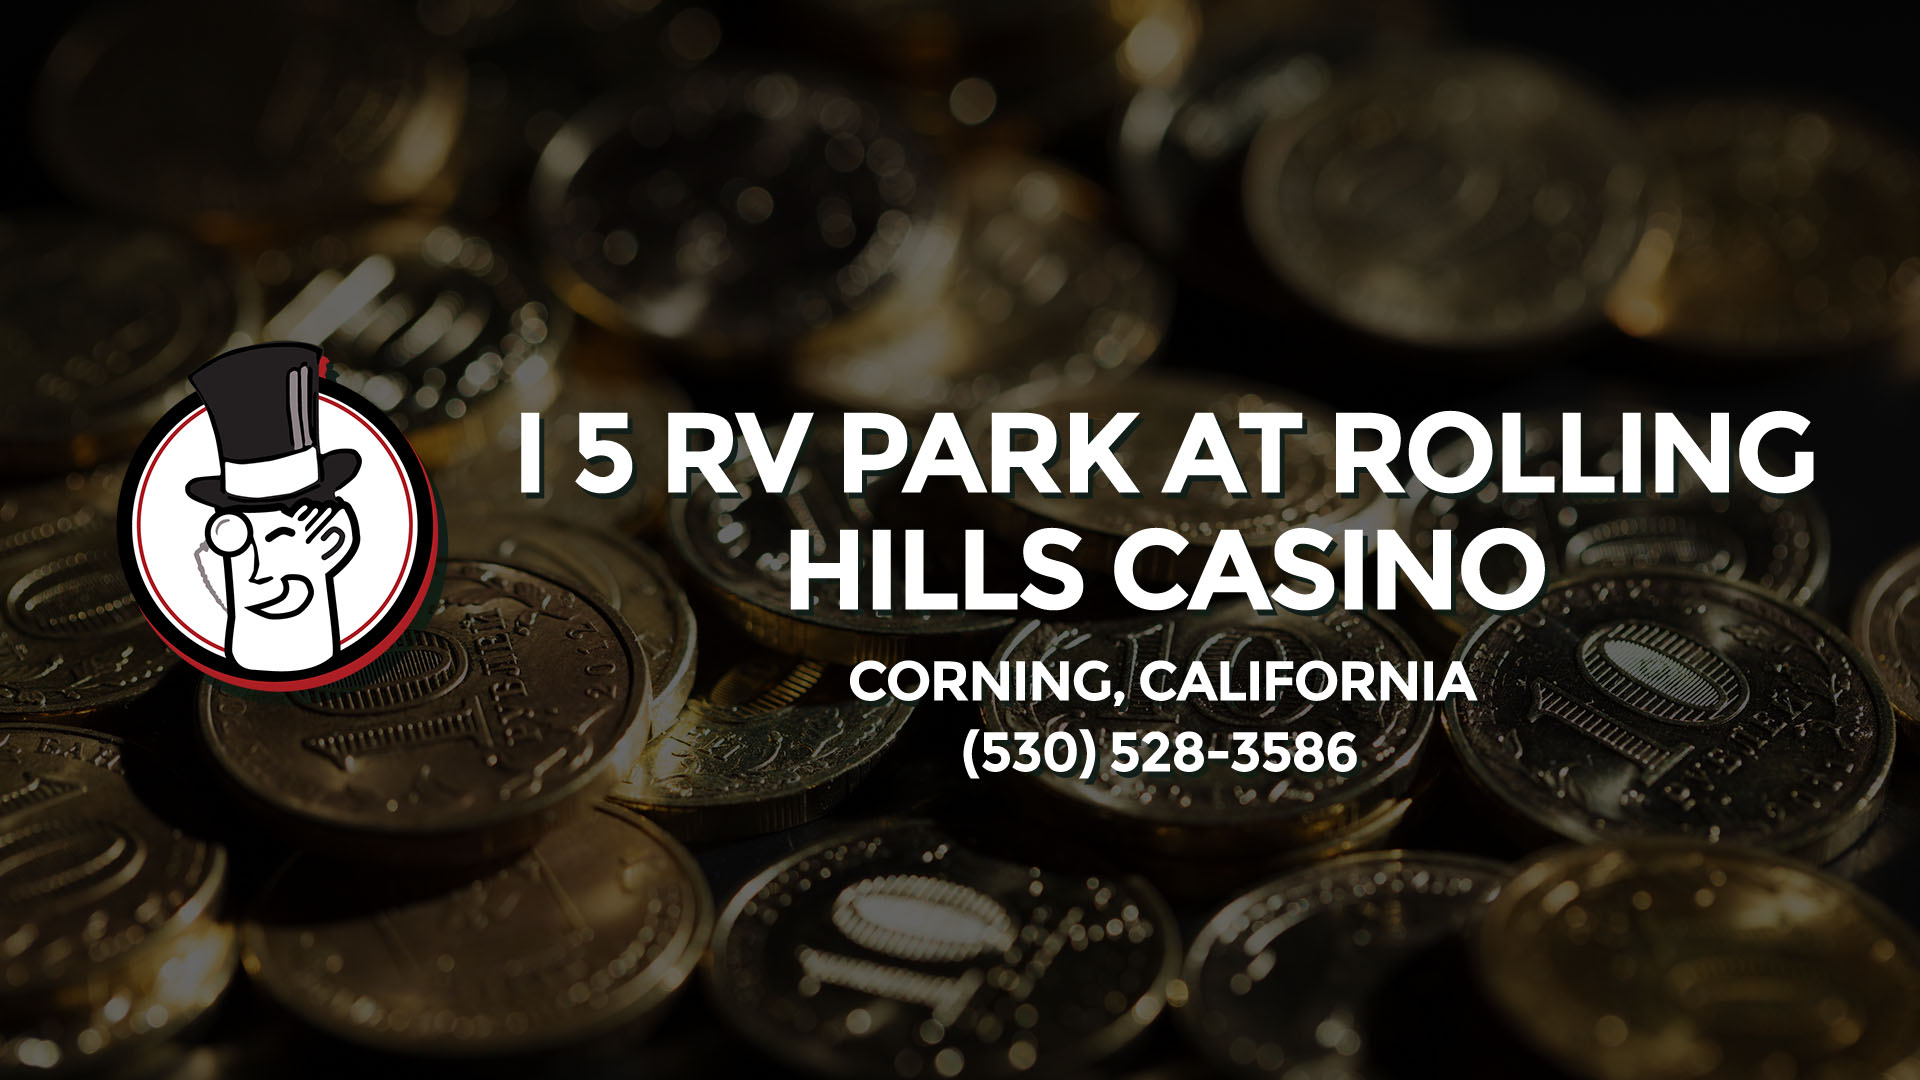 Rolling hills casino rv resort